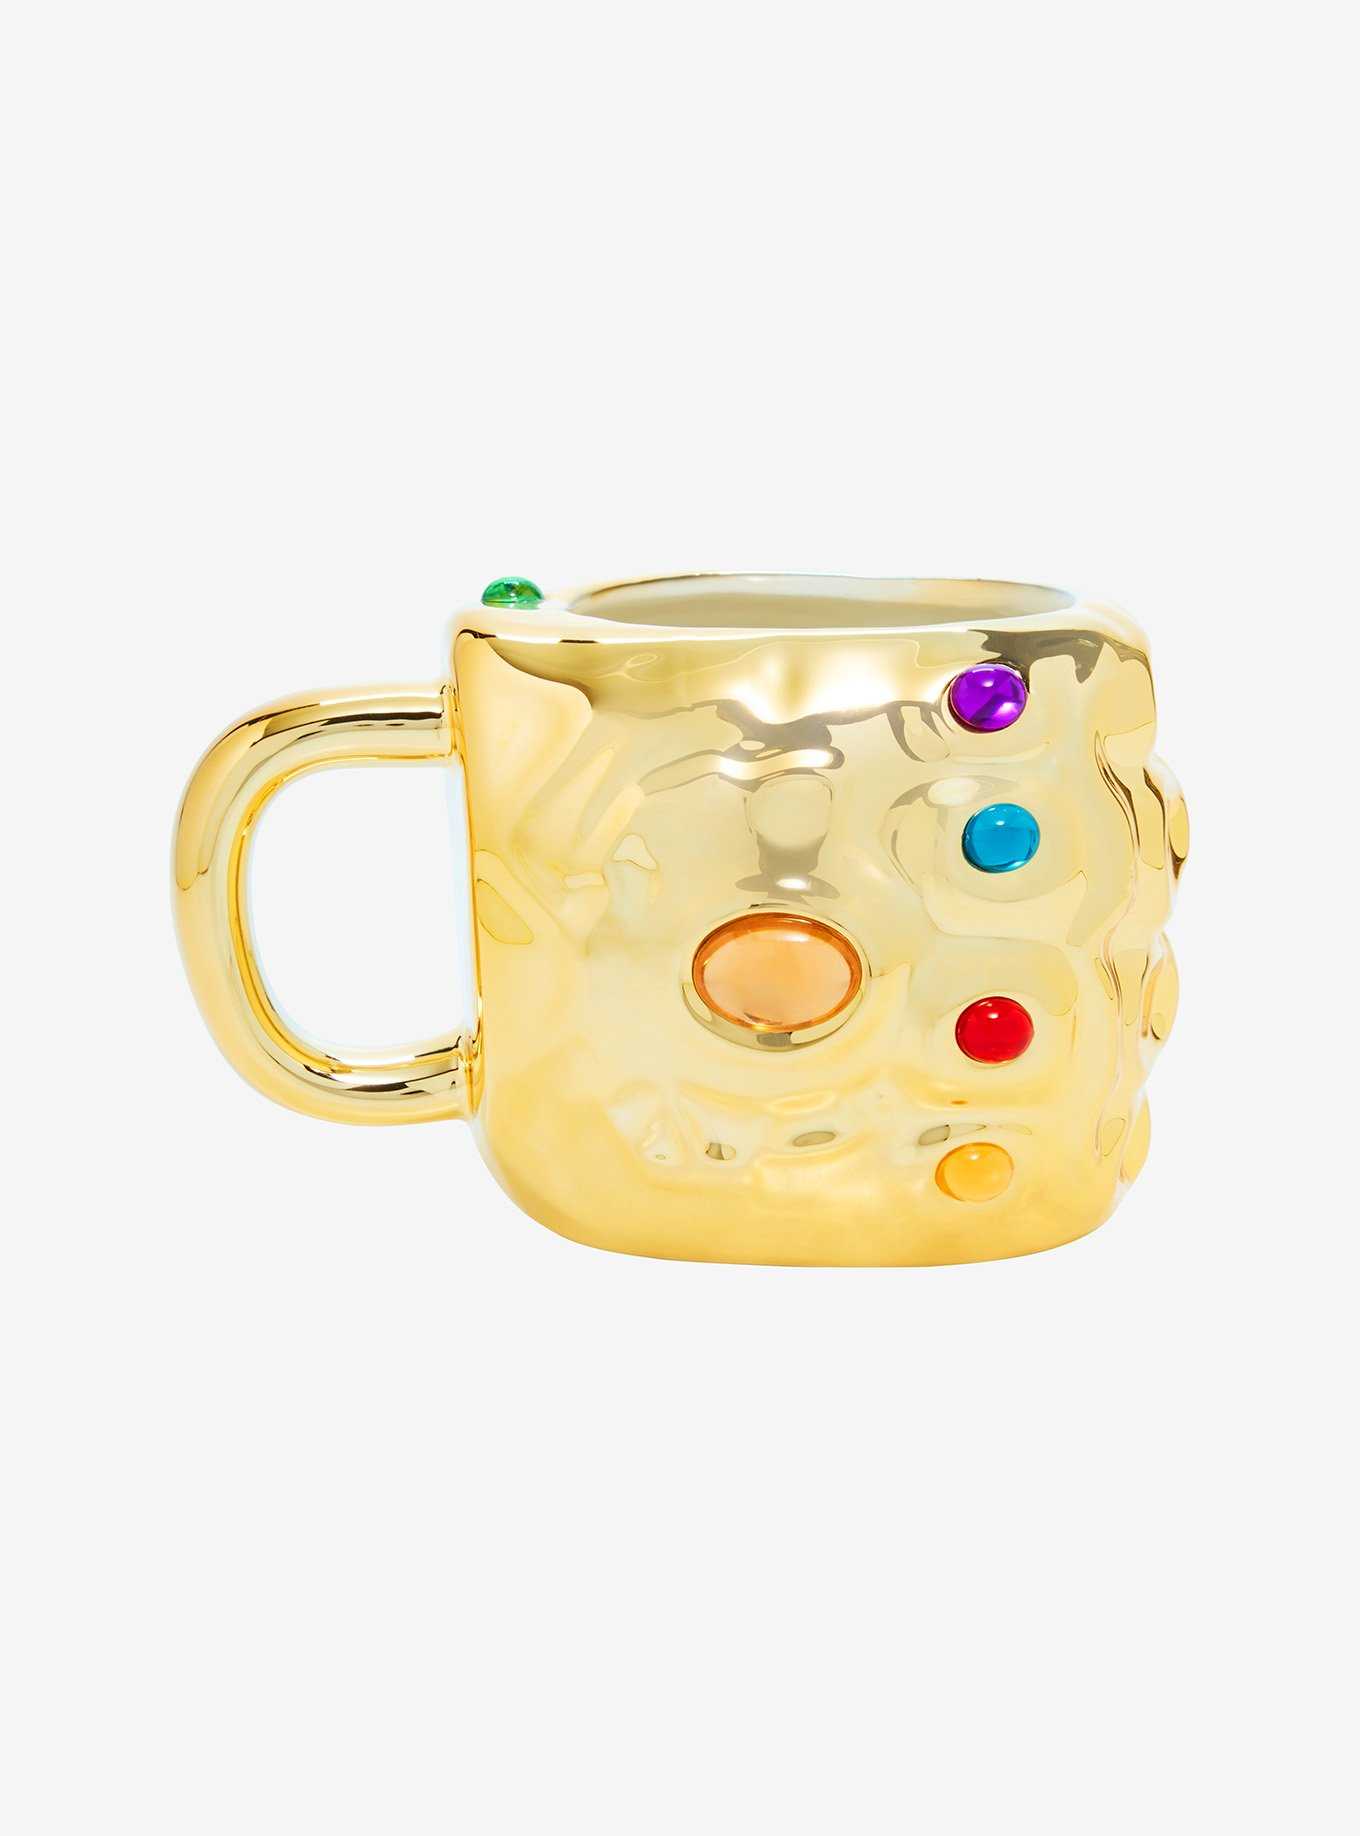 Marvel Avengers Thanos Infinity Gauntlet Mug, , hi-res